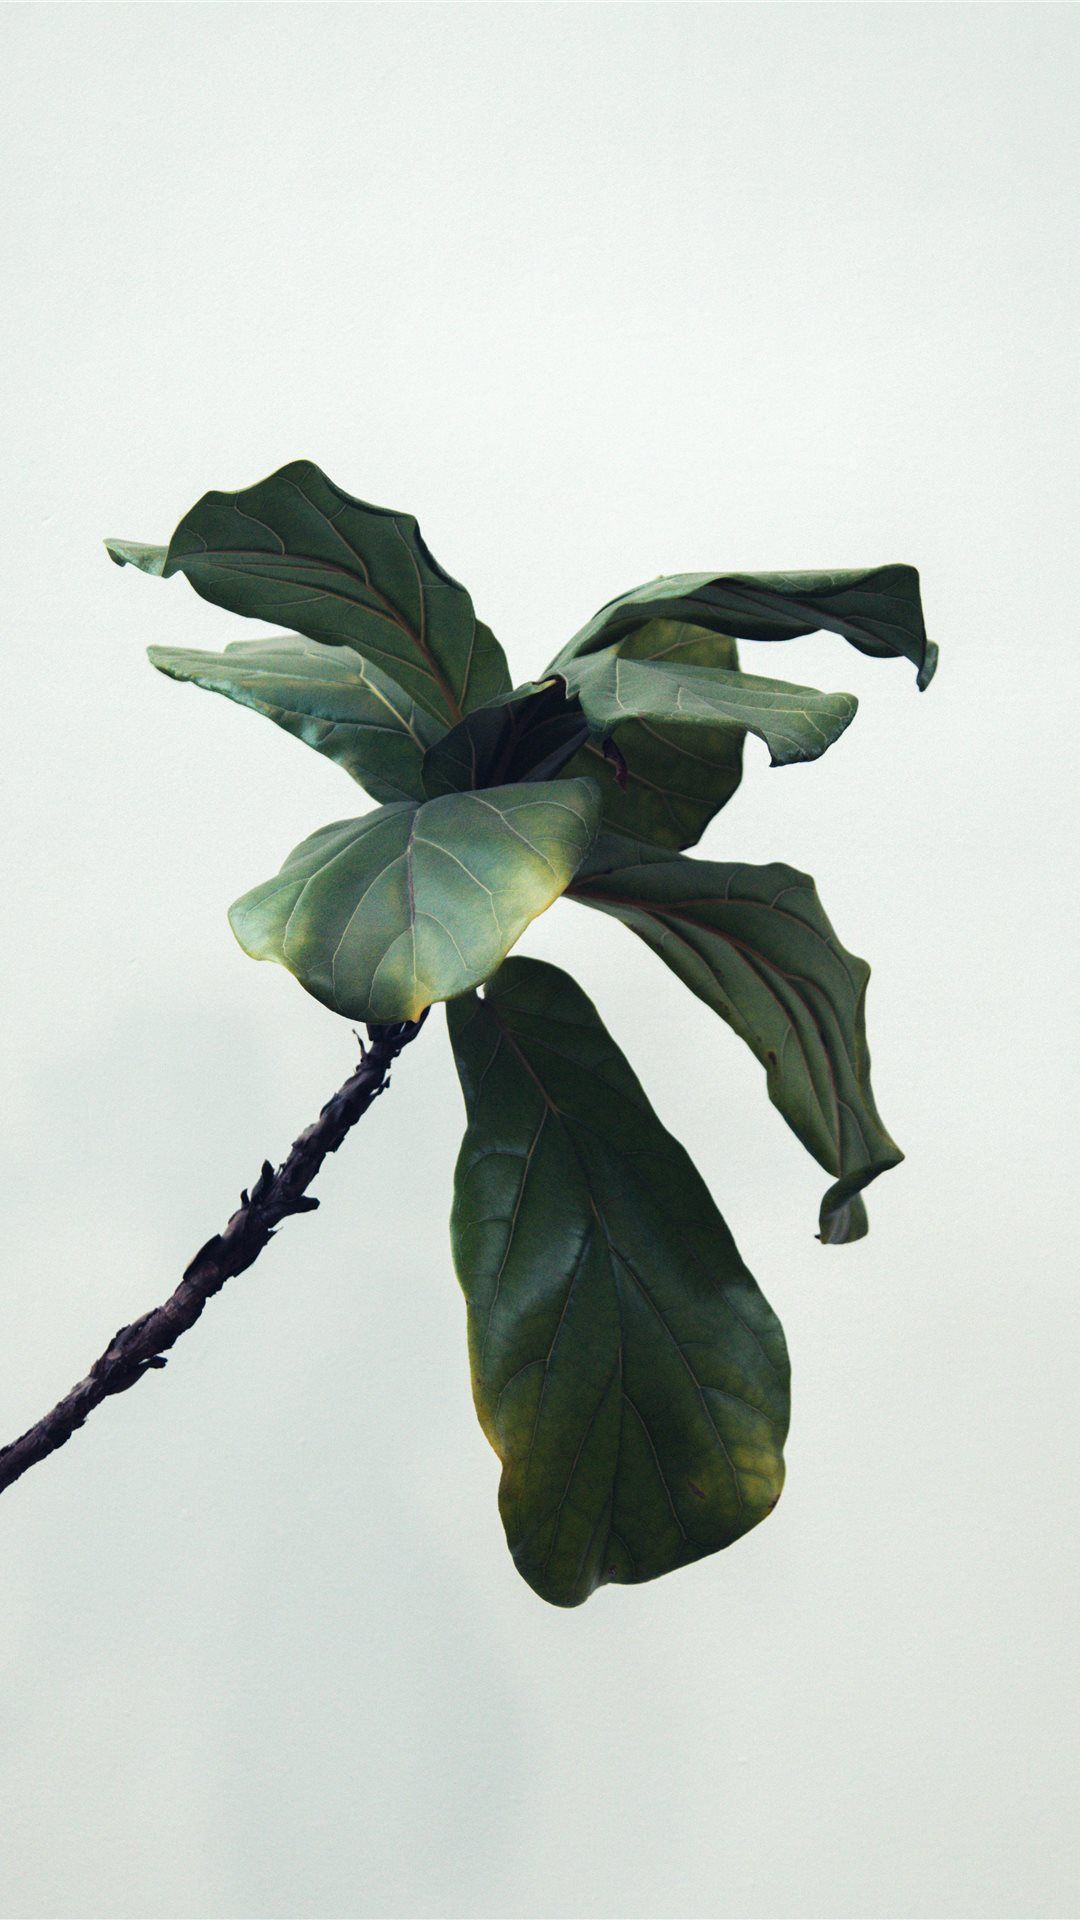 Green iPhone Wallpaper Hindu Gods In Fiddle Leaf Fig